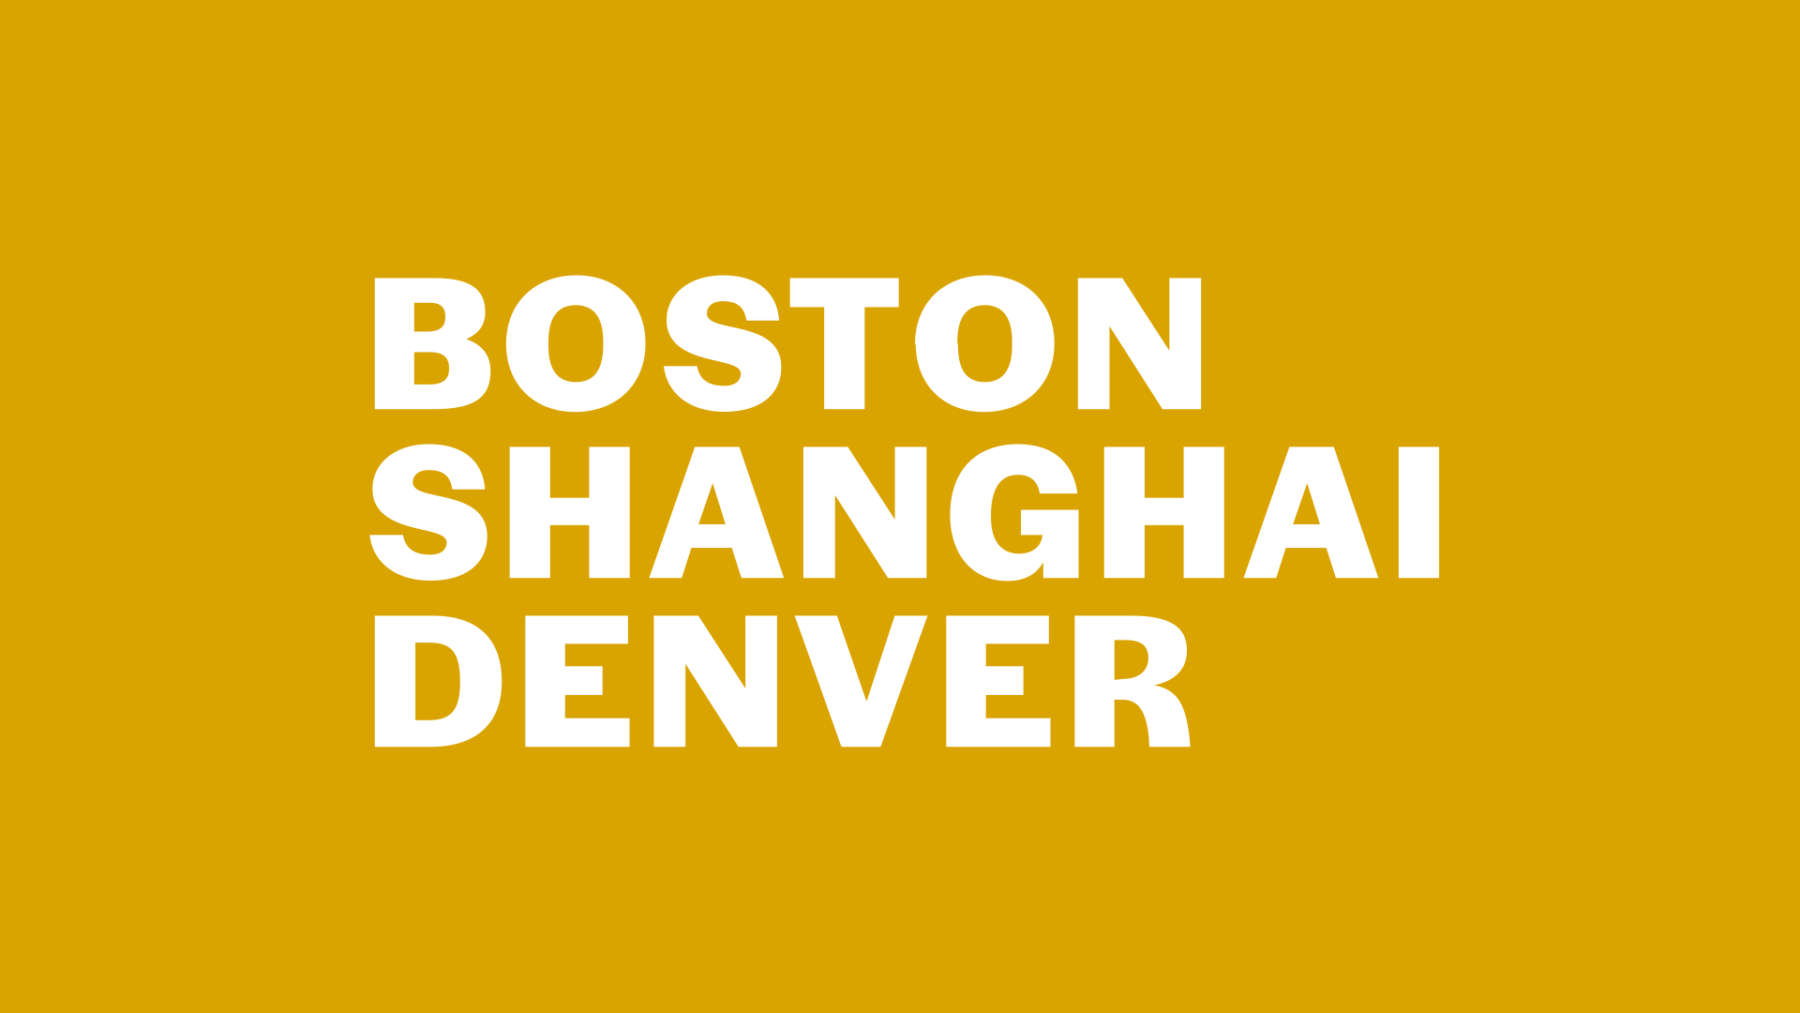 Boston Shanghai Denver text graphic